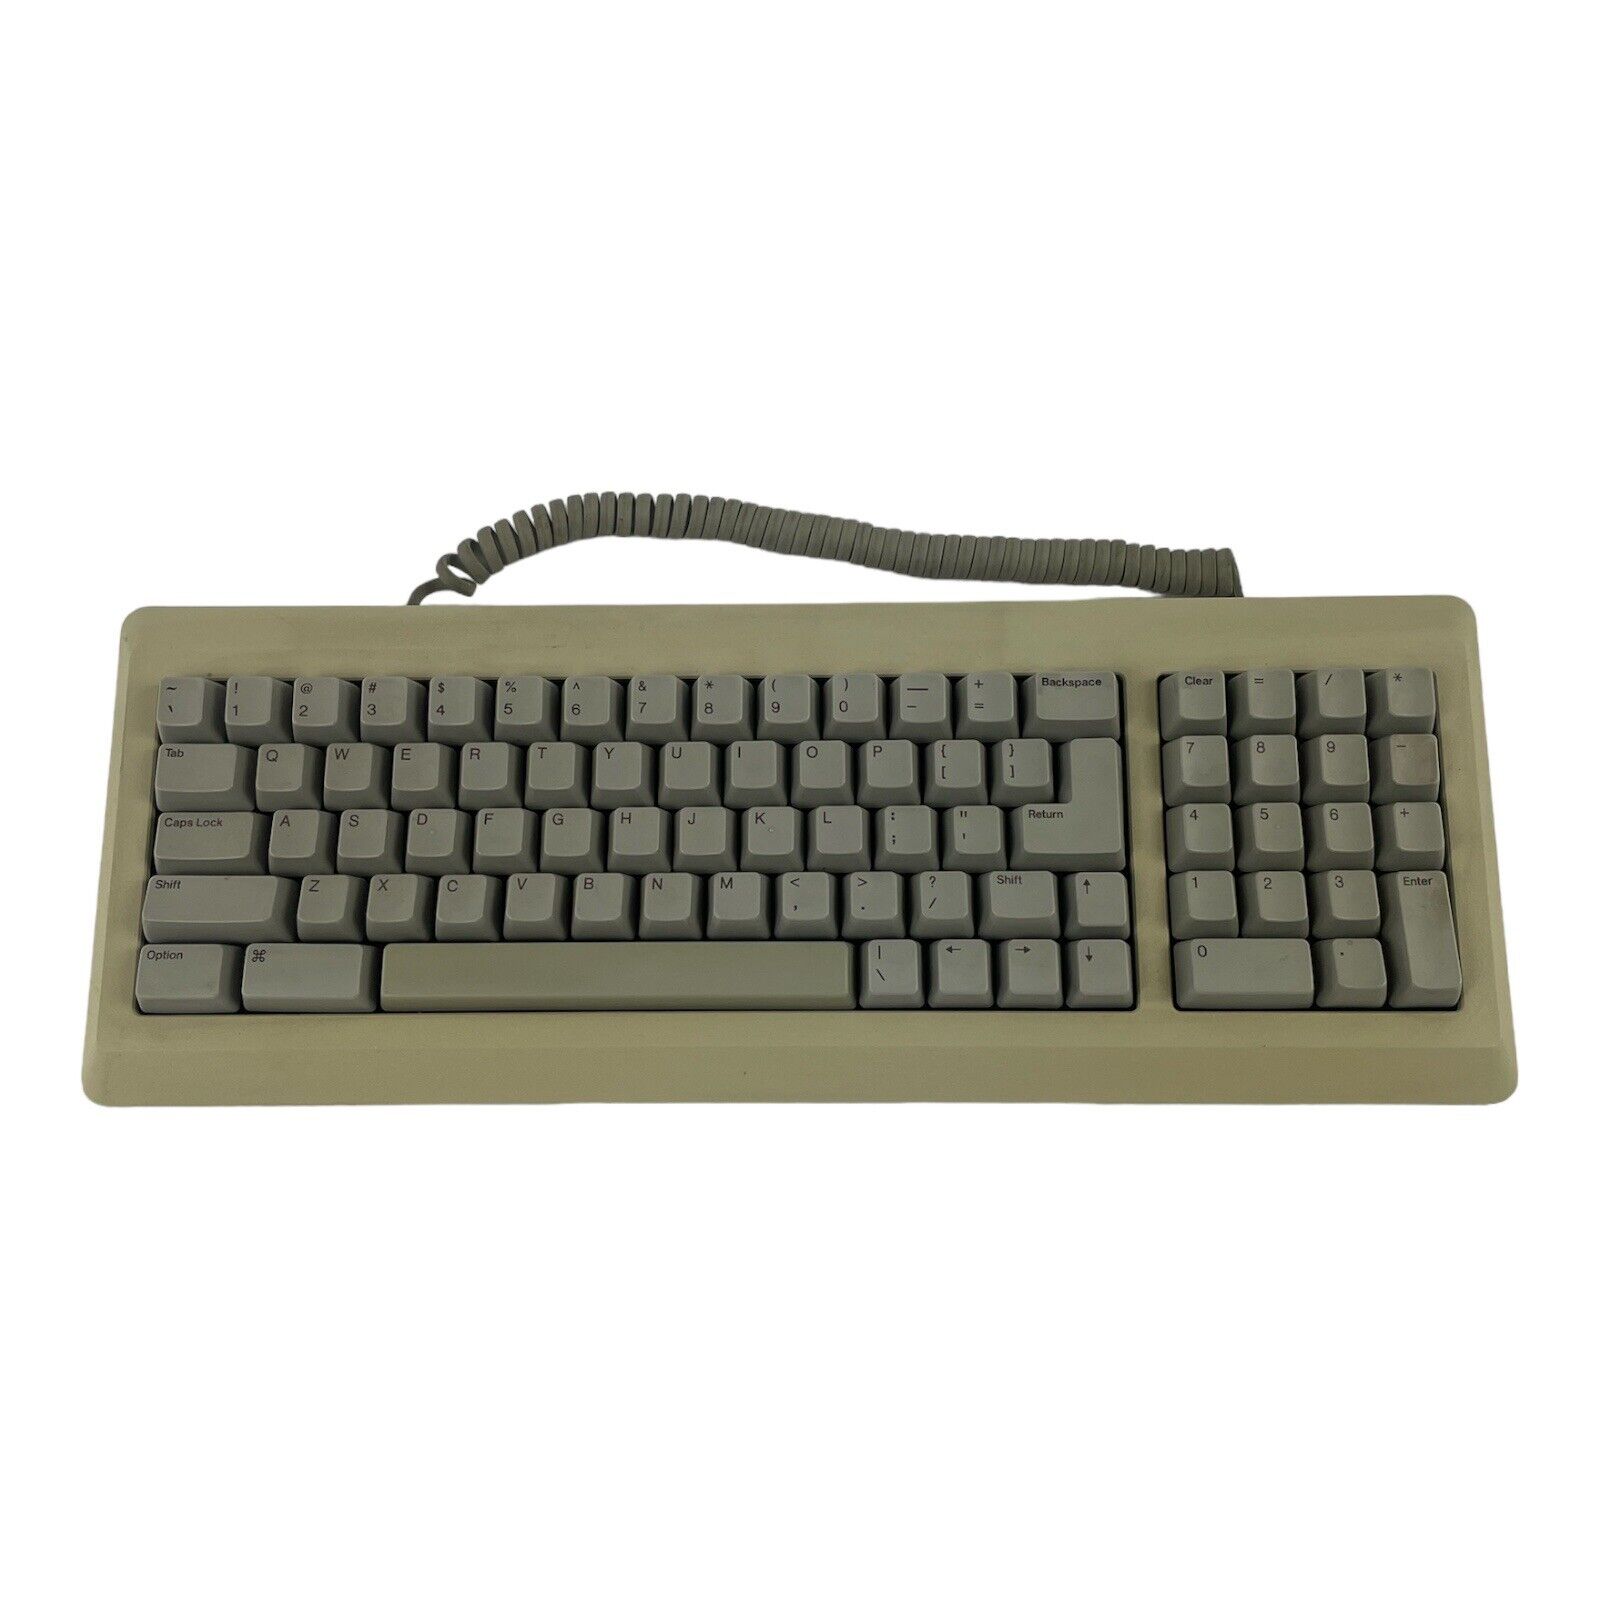 Vintage Apple Macintosh Keyboard M0110A Tested-Works